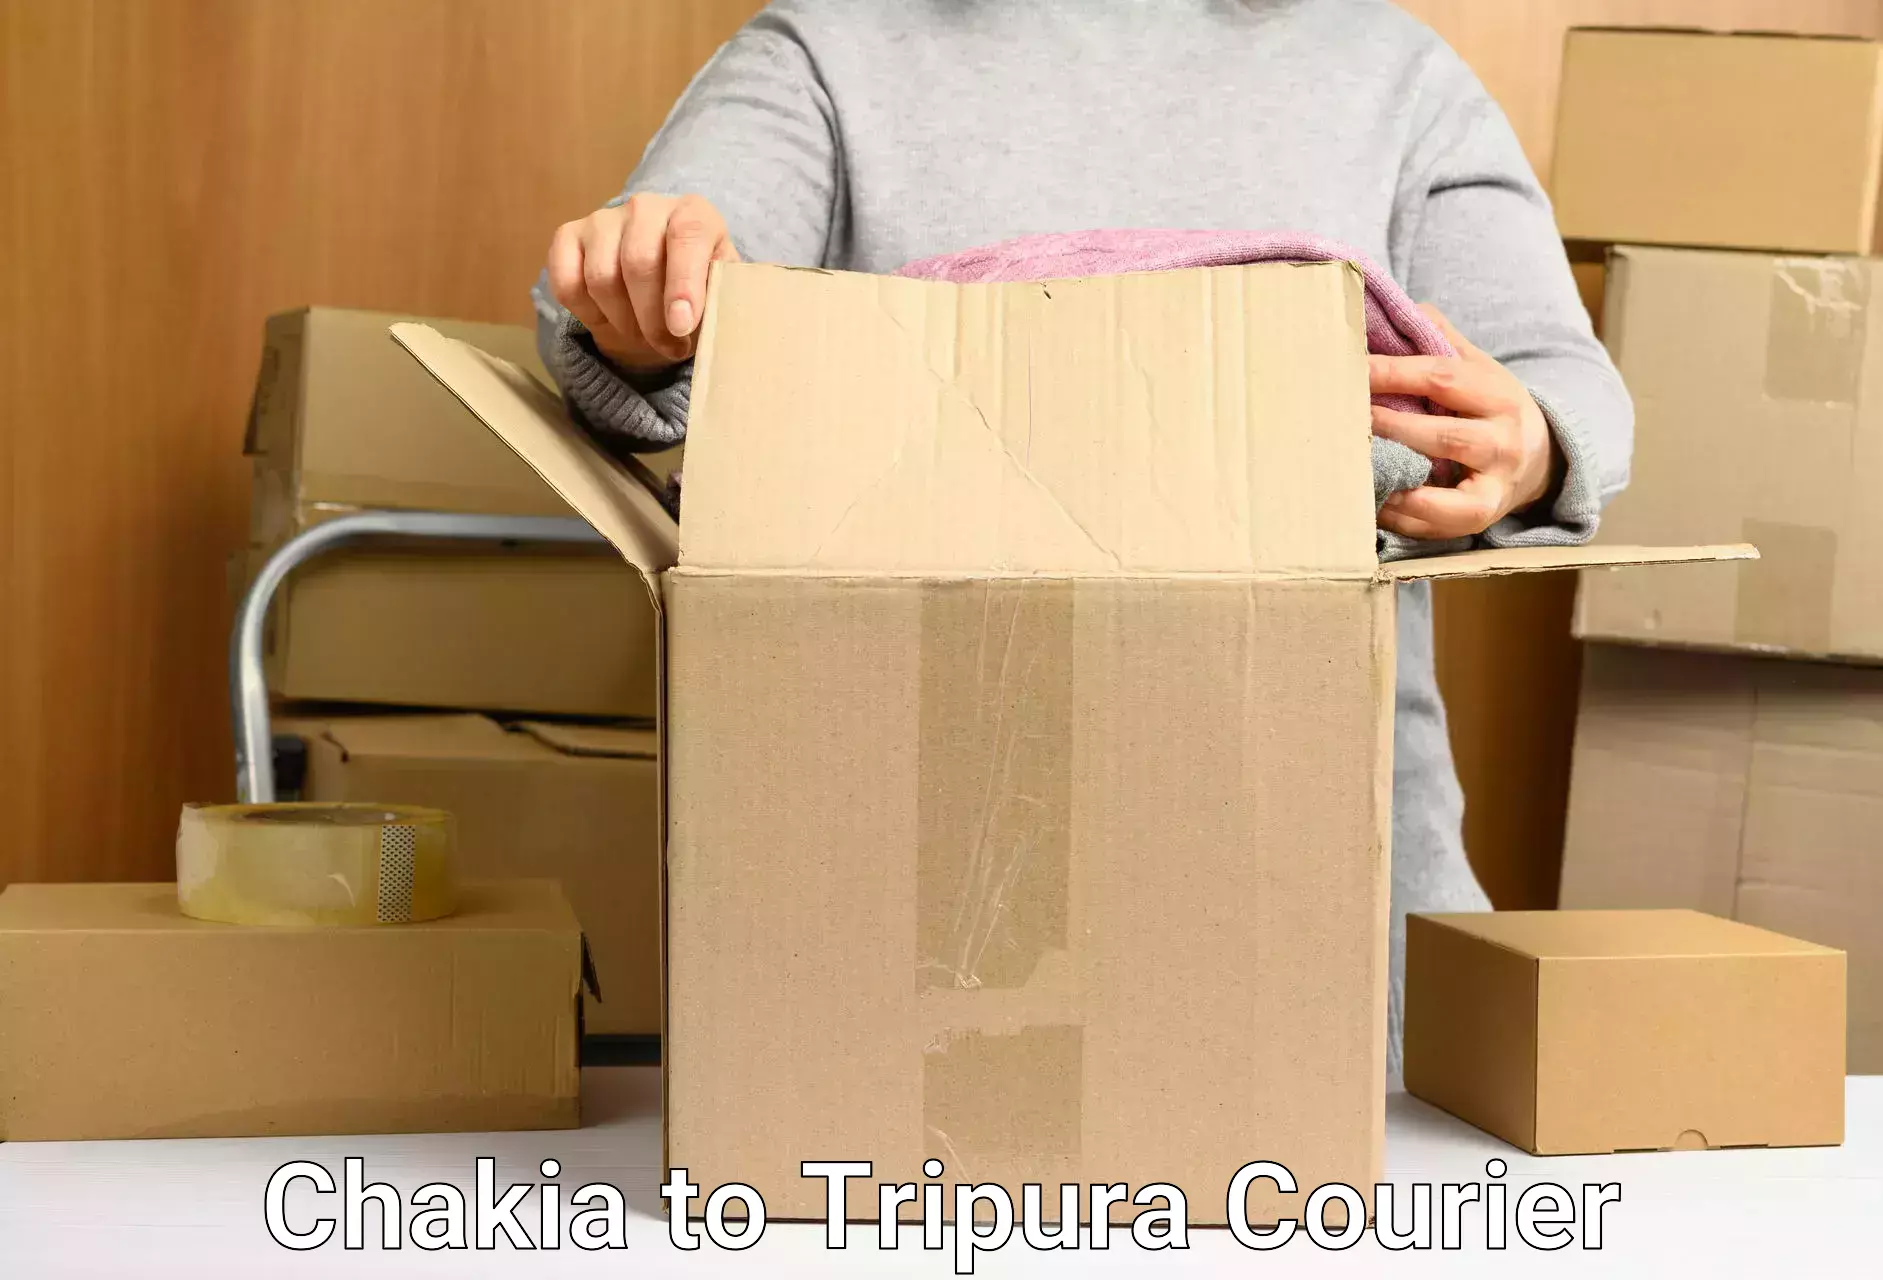 Expedited shipping methods Chakia to Udaipur Tripura